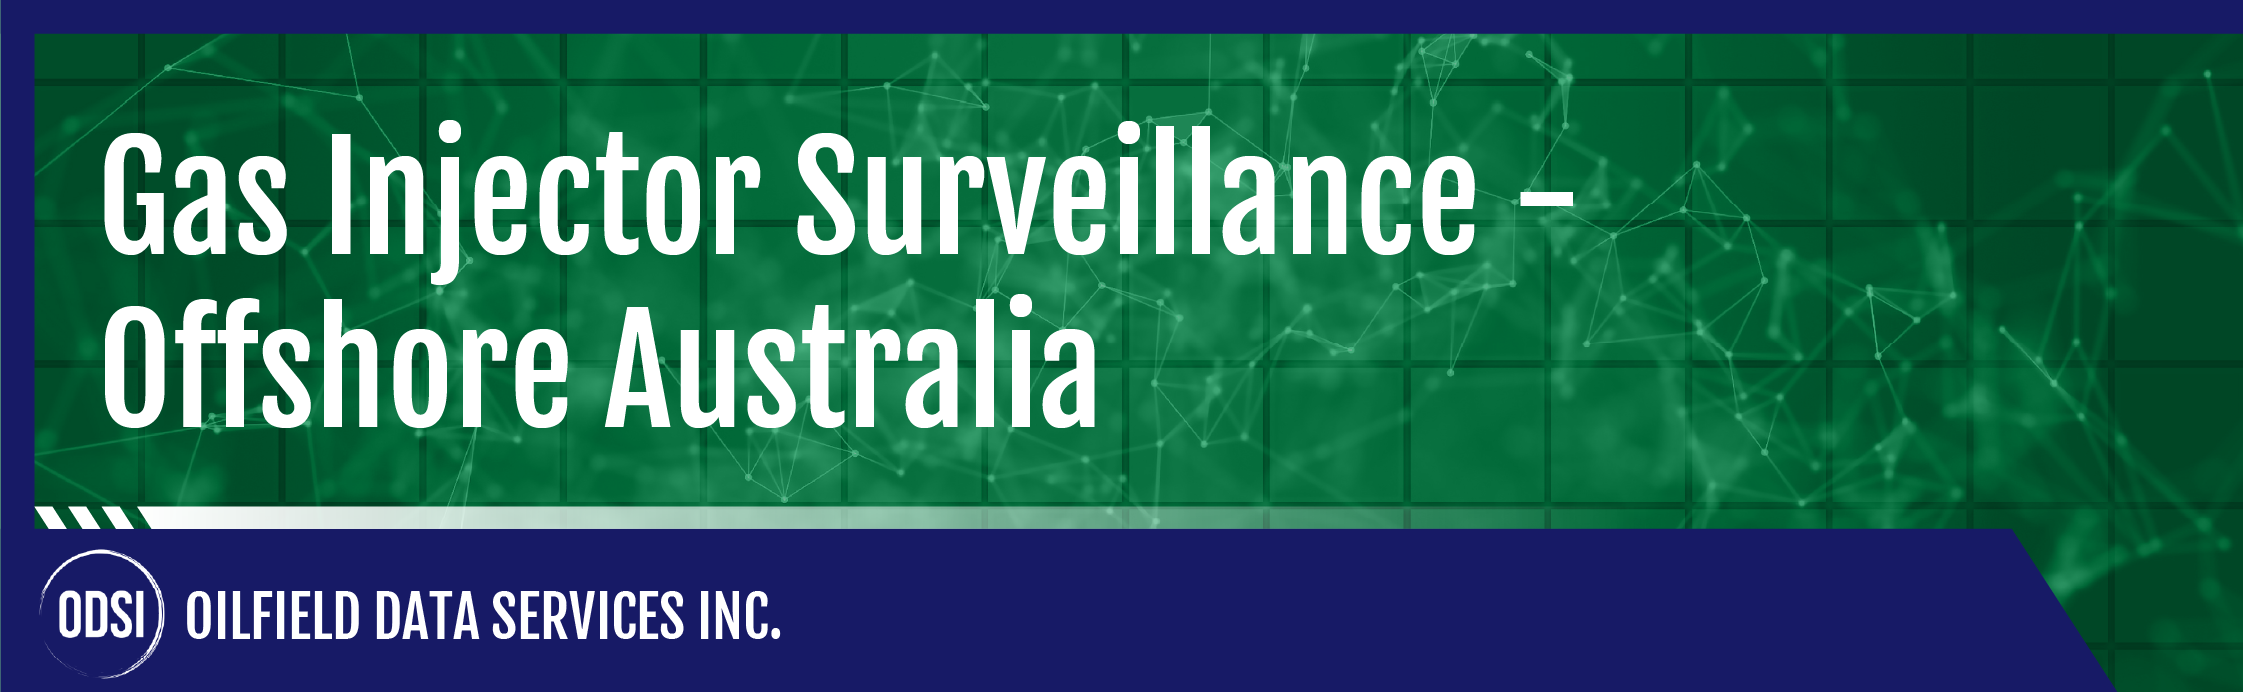 Gas Injector Surveillance - Offshore Australia